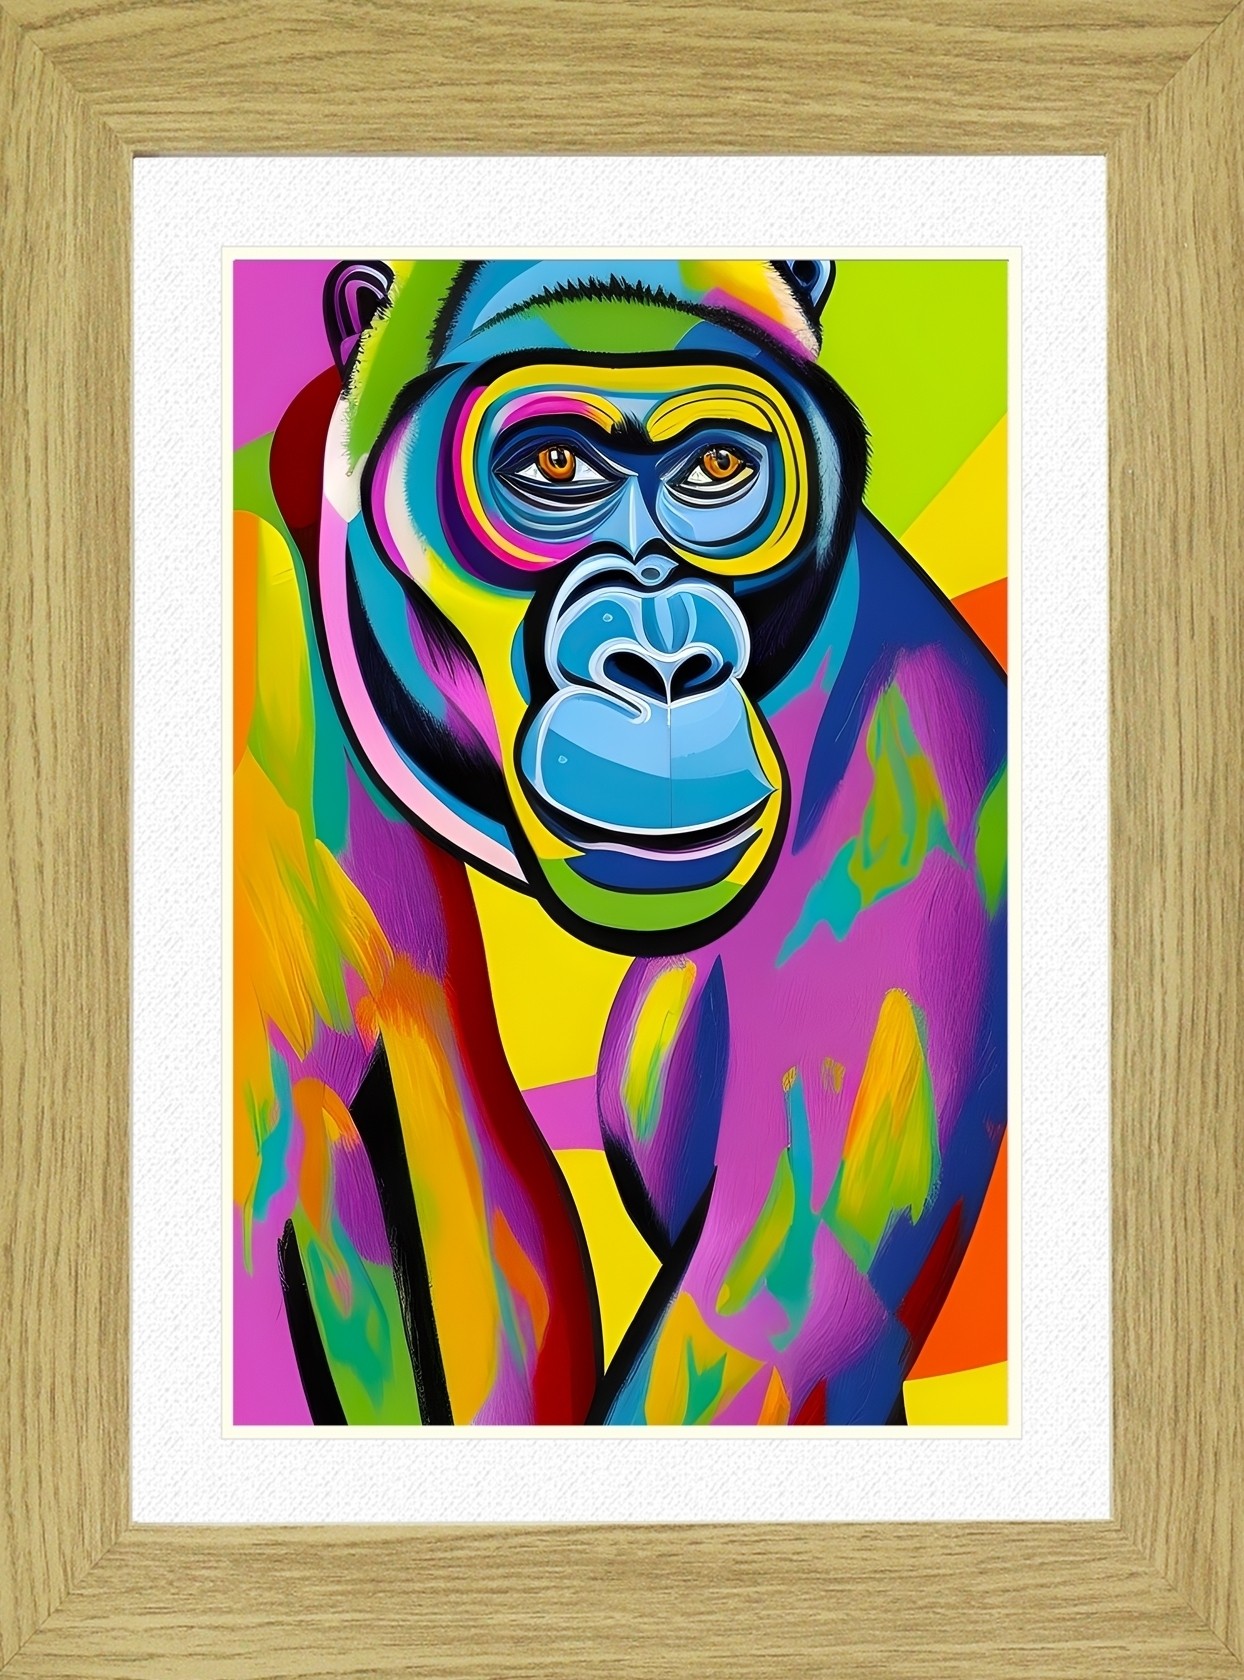 Monkey Chimpanzee Animal Picture Framed Colourful Abstract Art (25cm x 20cm Light Oak Frame)